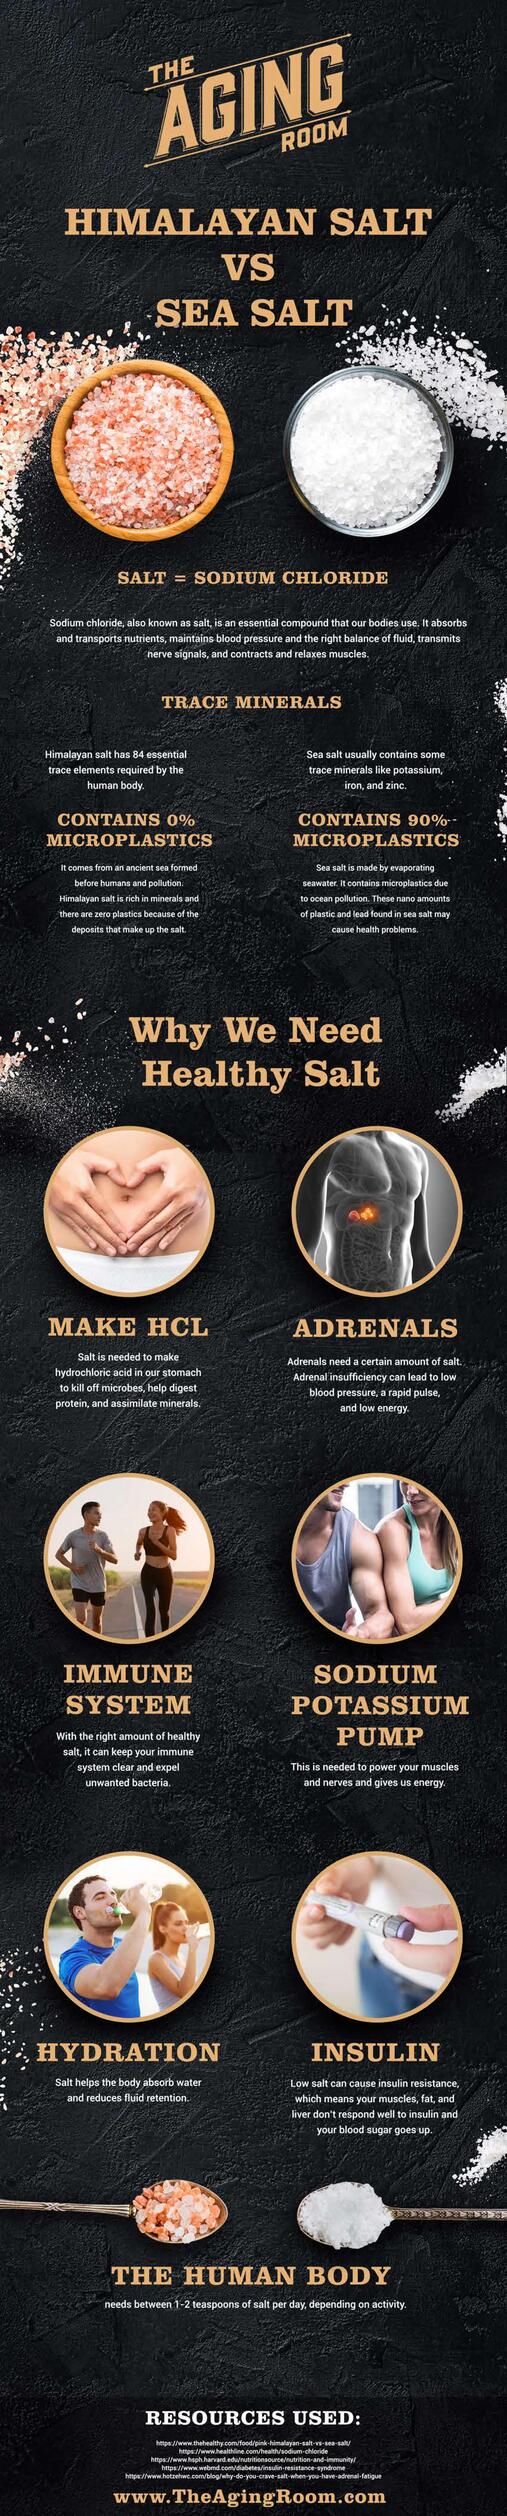 The Aging Room. Himalayan Salt vs Sea Salt. Benefits Explained.